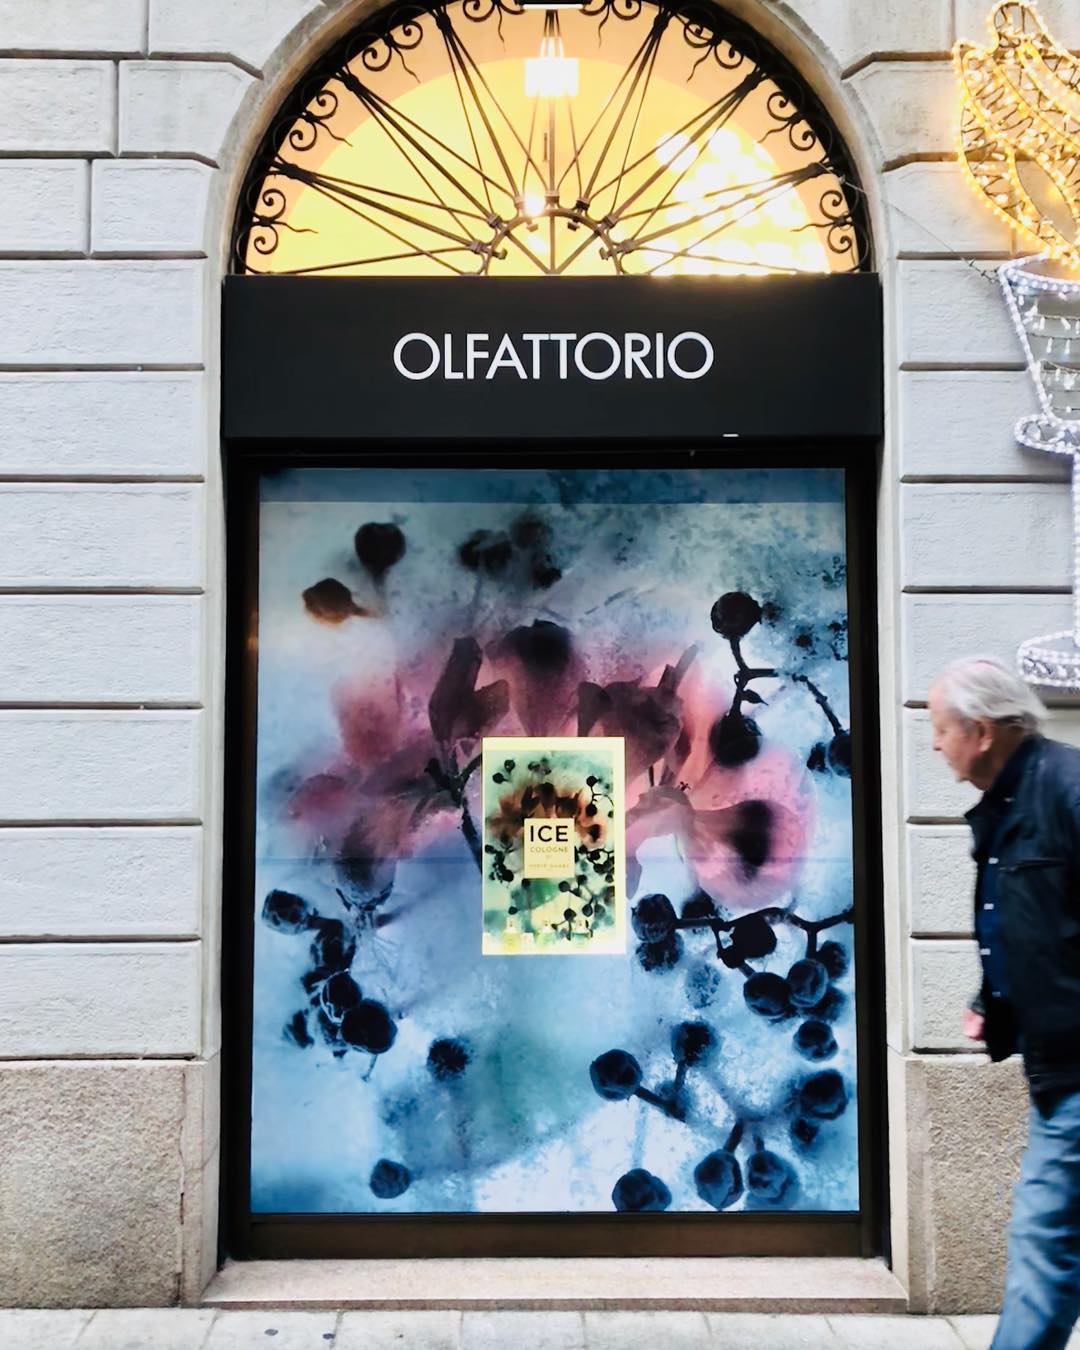 Herve Gambs - ICE collection Window at @olfattorio.baraparfums Milano 😜 So happy.
#olfattorio #baraparfumsbrera5 #hervegambs #ice #perfume #perfumelovers #nicheperfume #milano